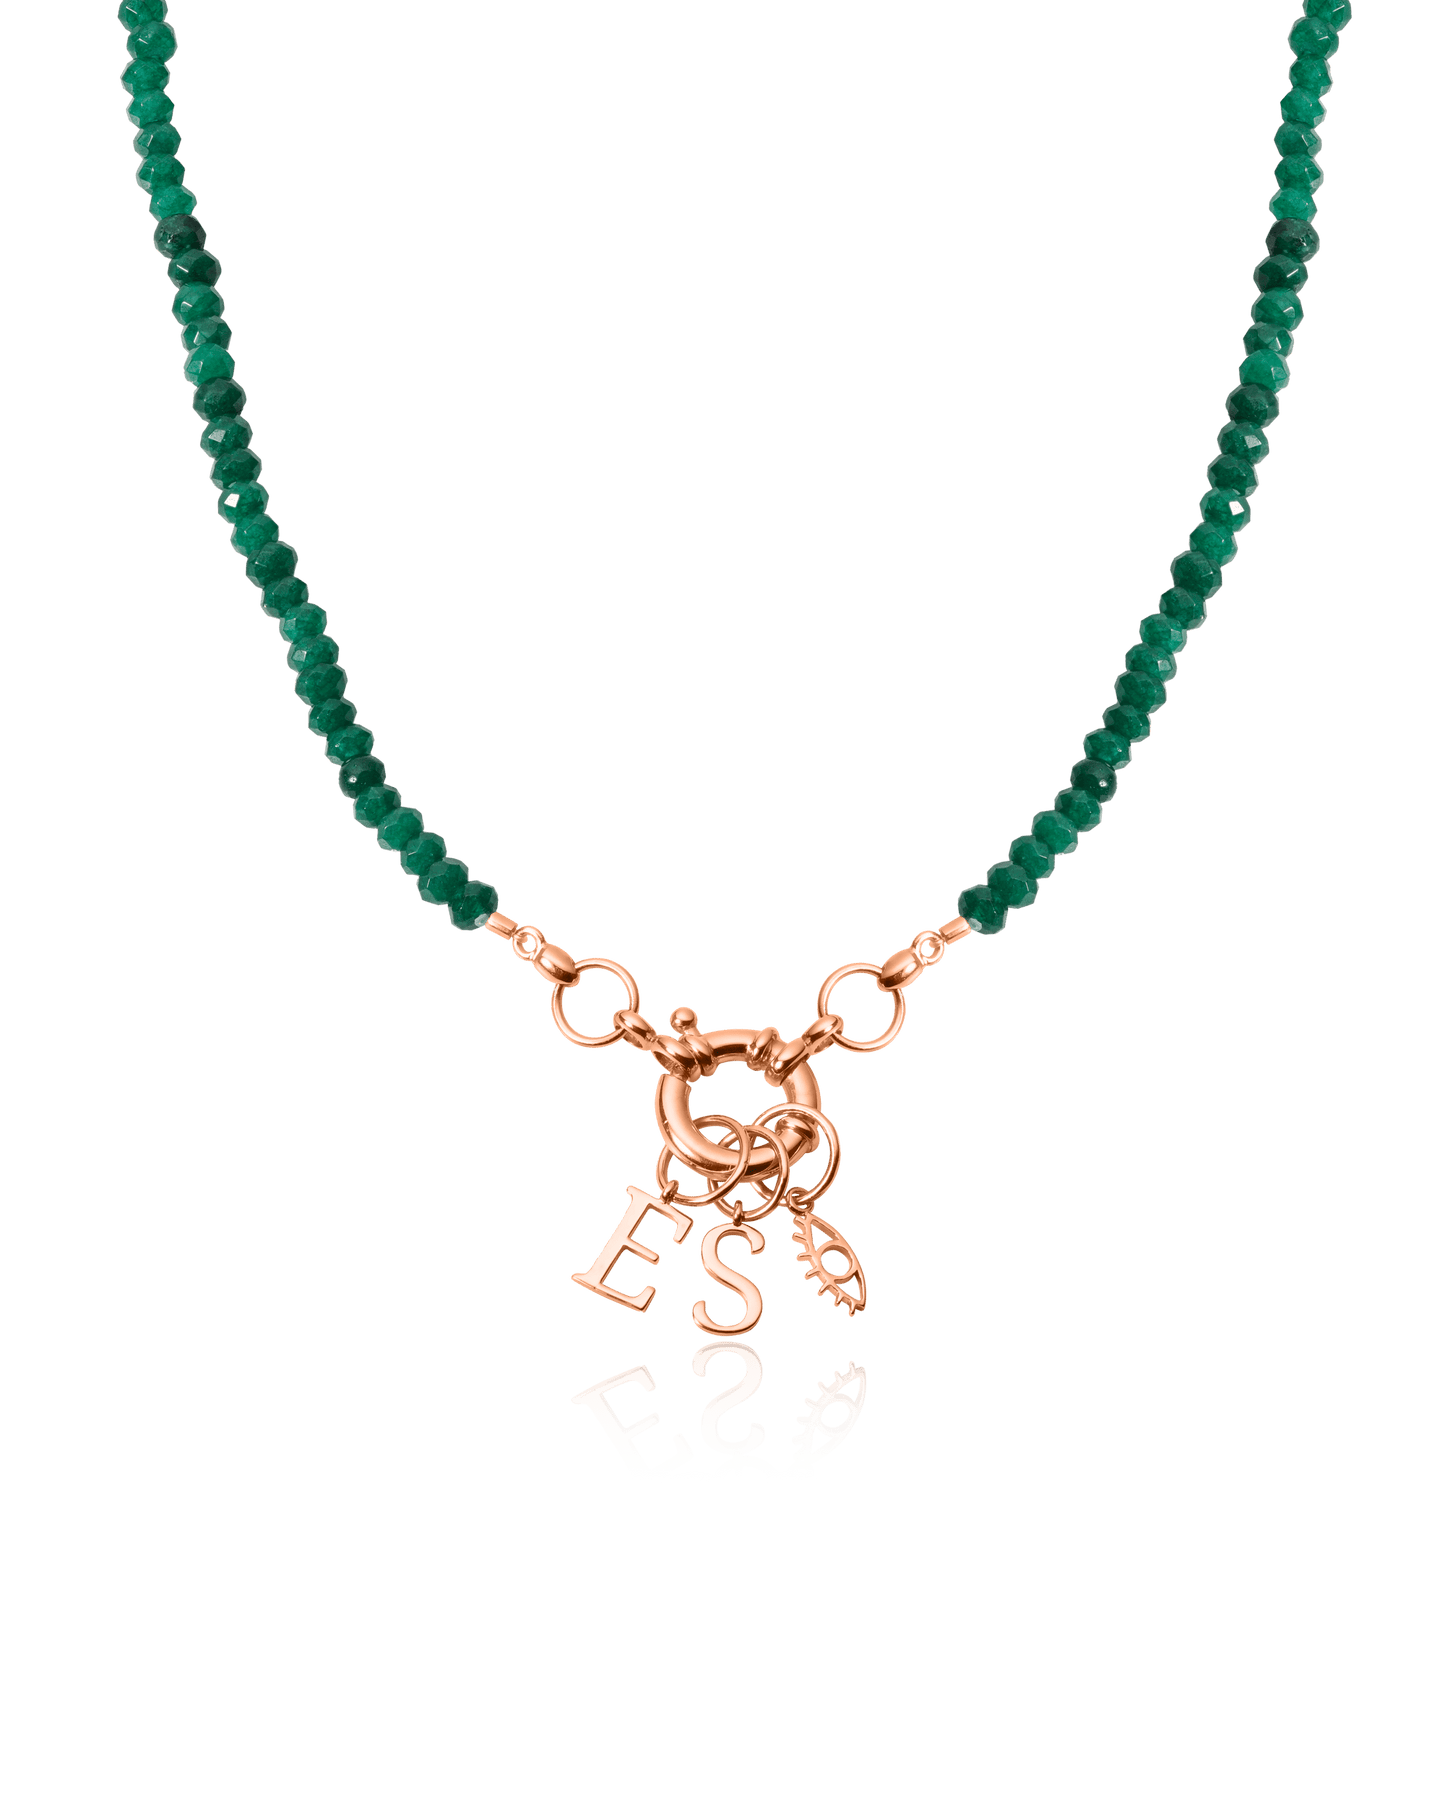 Black Spinnel Charm Lock Necklace - 18K Rose Vermeil Necklaces magal-dev Green Jade Gemstones 1 Charm 16"